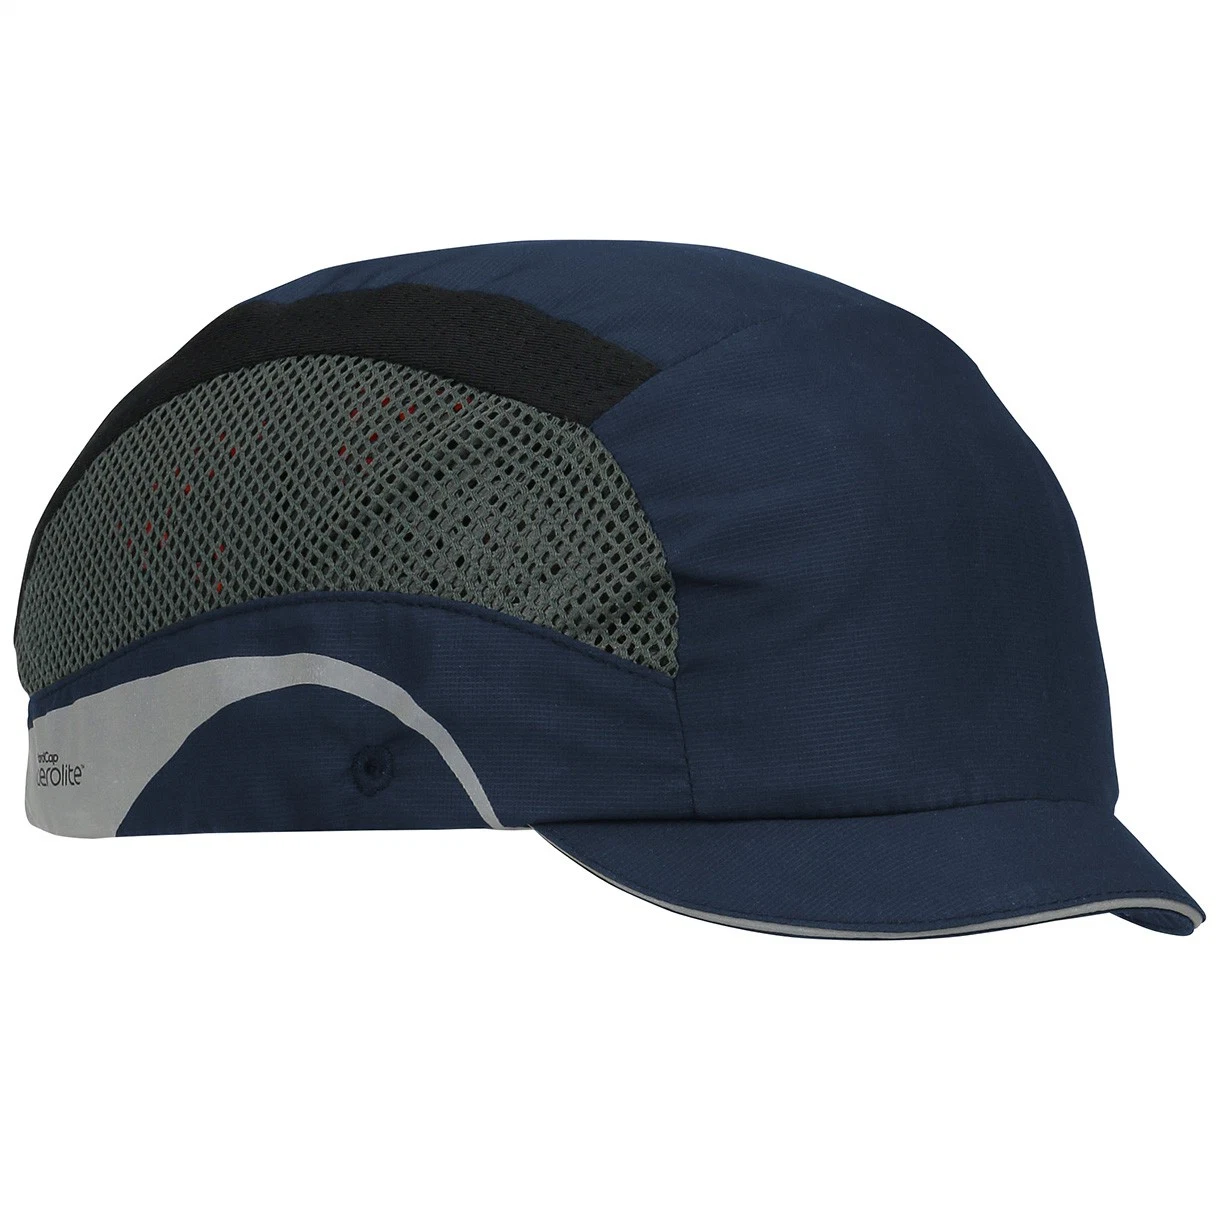 Professional Industrial Helmet ABS Material Workshop Baseball Hats Dark Blue Work Bump Caps